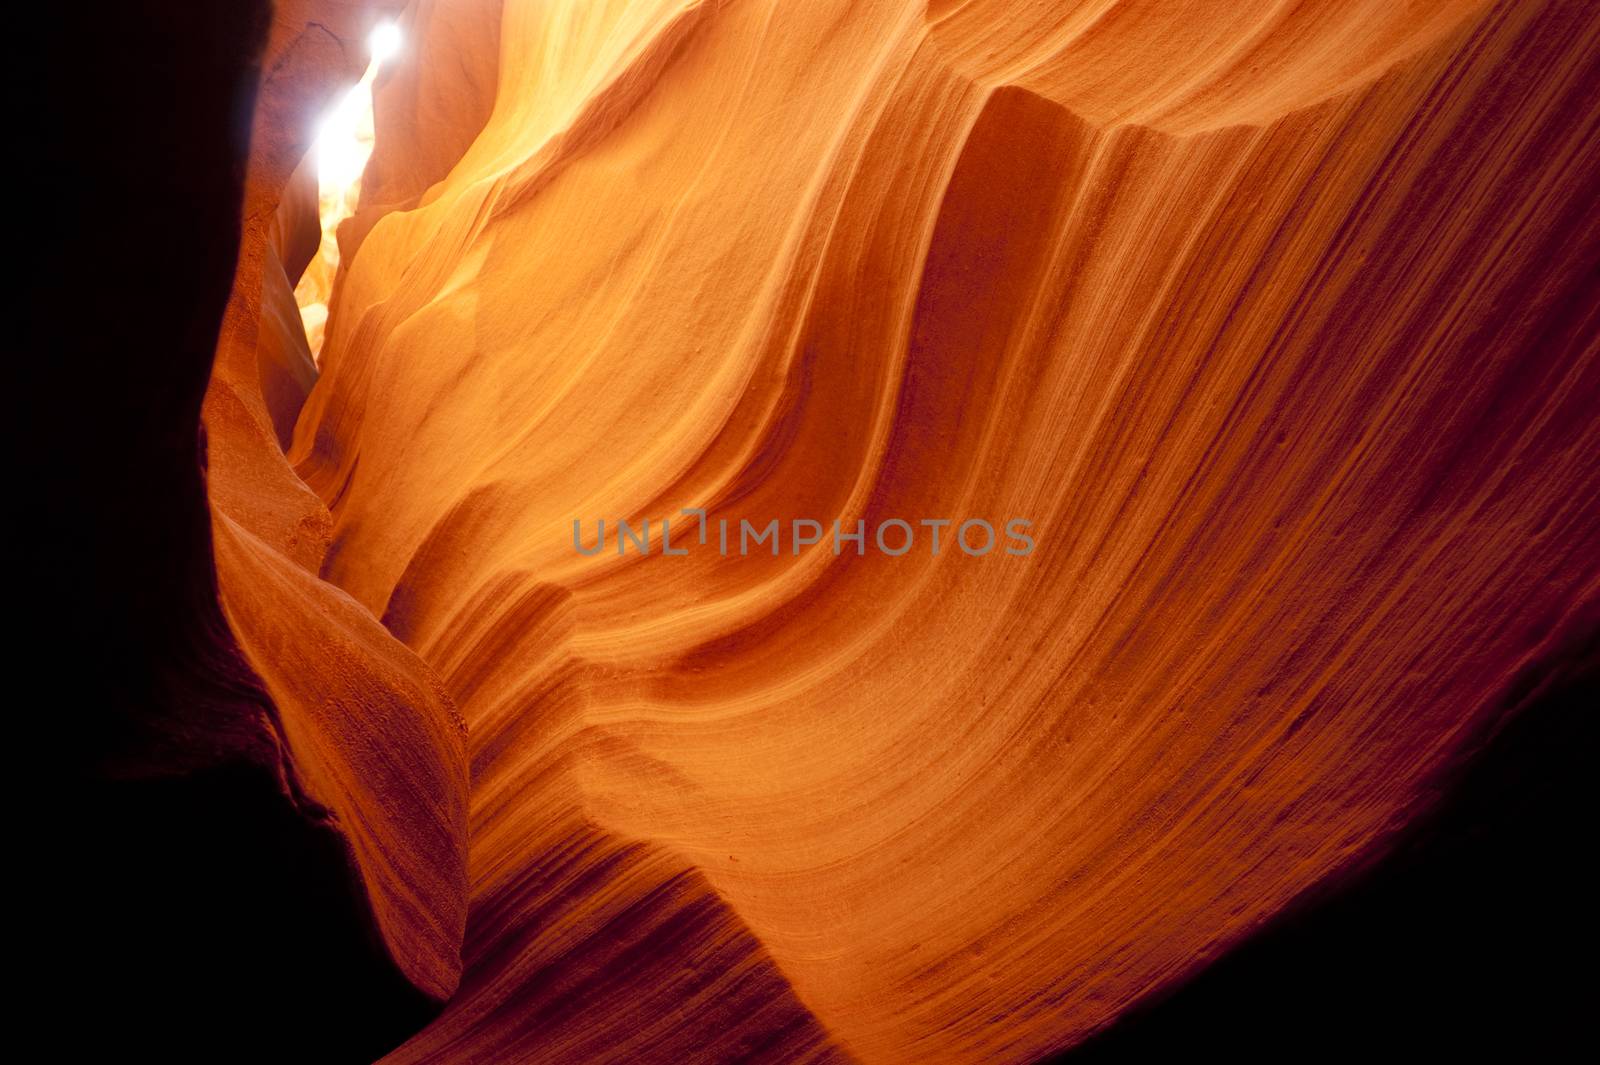 Slot Canyon Sandstone Rock Geology Desert Southwest Arizona USA by ChrisBoswell